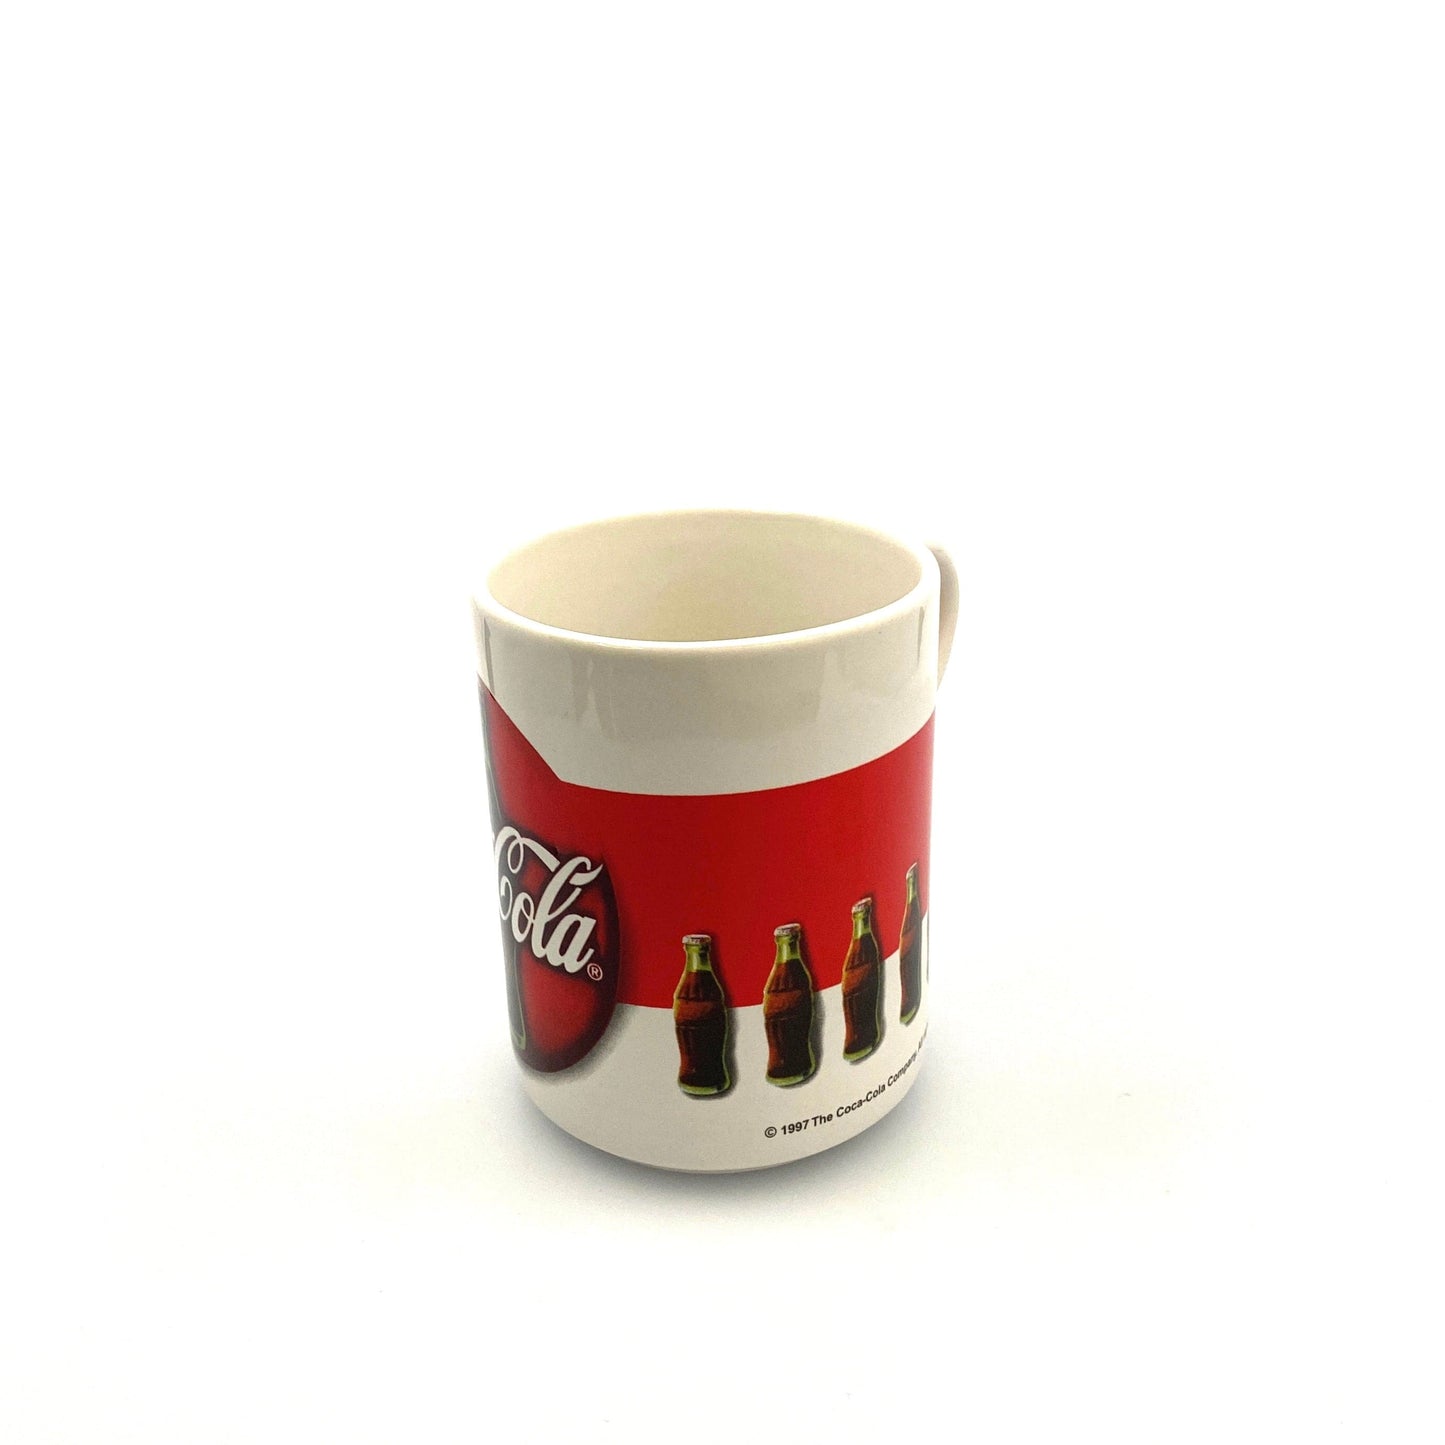 Coca-Cola Large Logo Red White Ceramic Coffee Cup Mug 1997